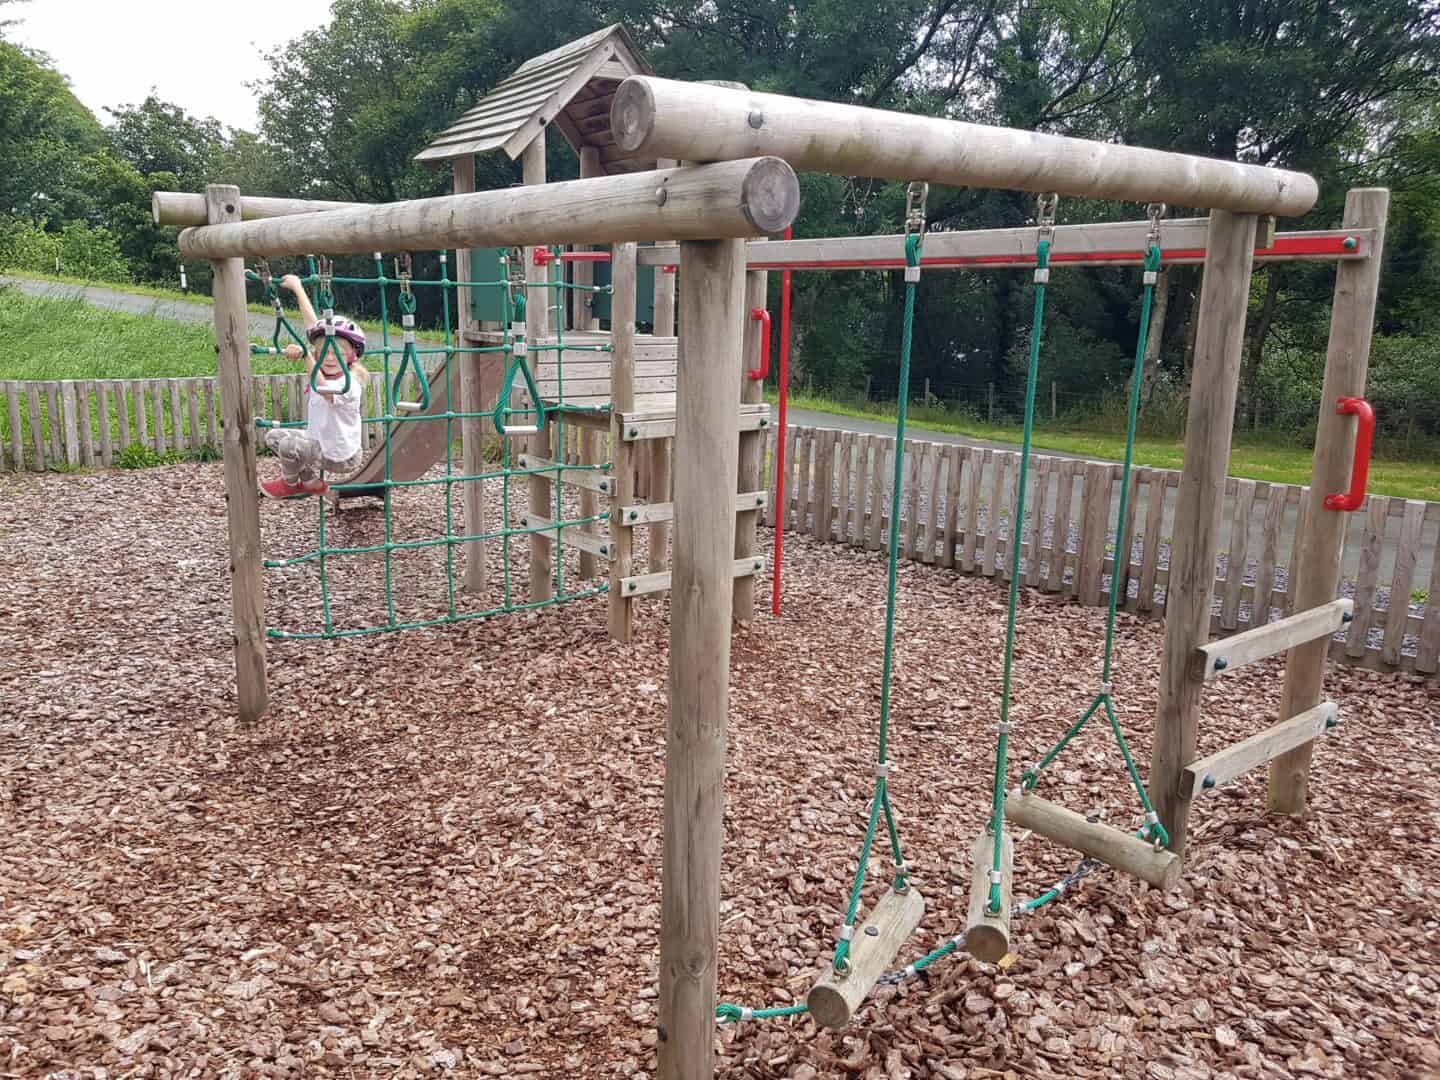 Climbing frame in playground at Mary Jones World, Lake Bala, North Wales